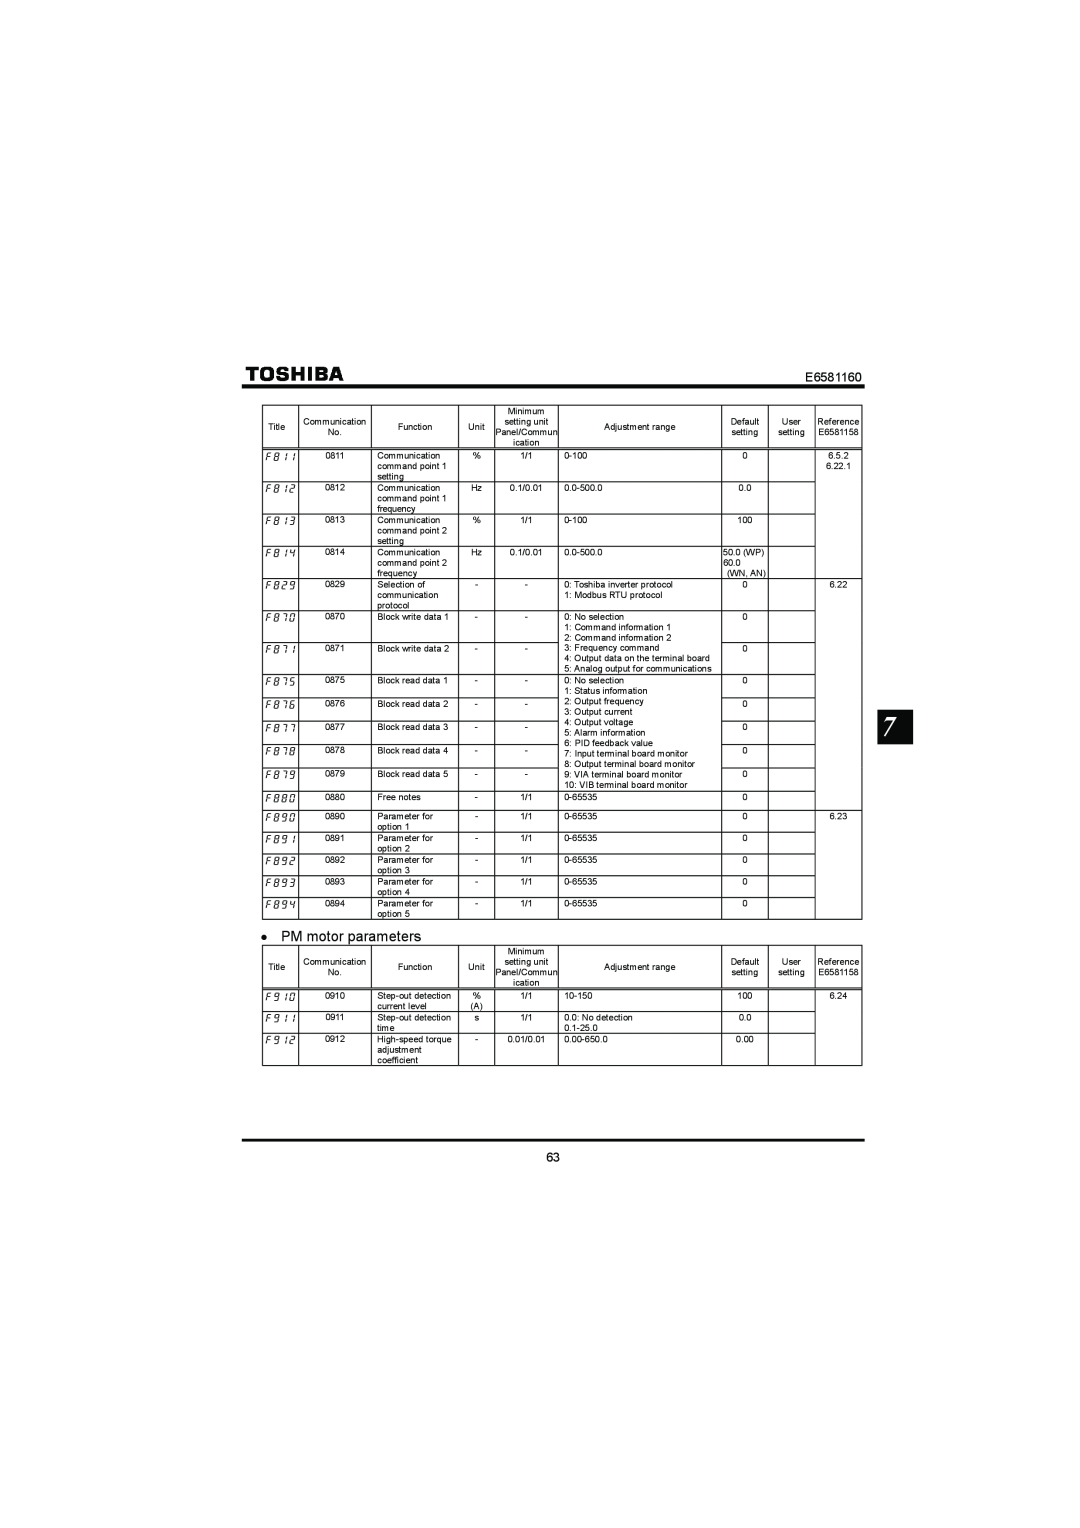 Toshiba VF-S11 manual PM motor parameters, E6581160 